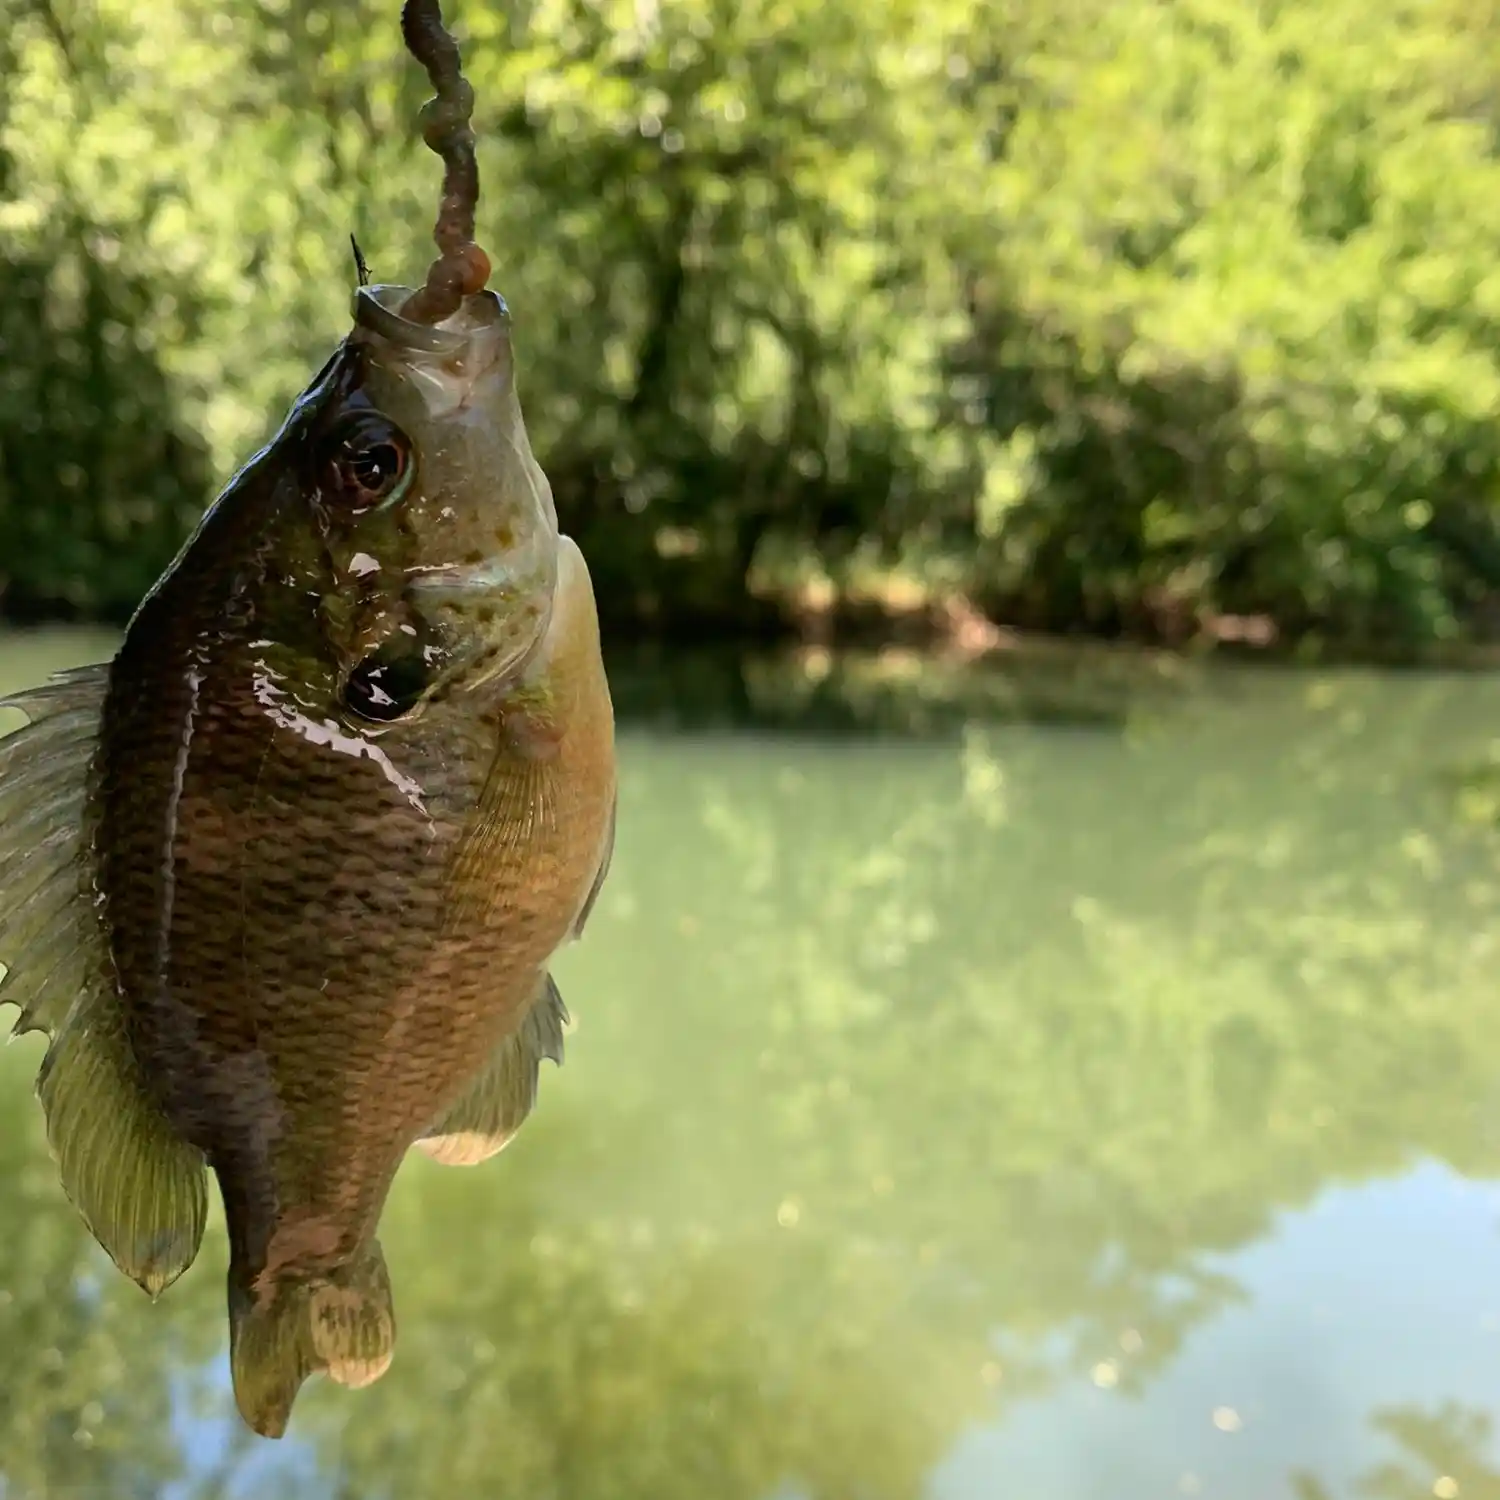 Jug Fishing in Alabama